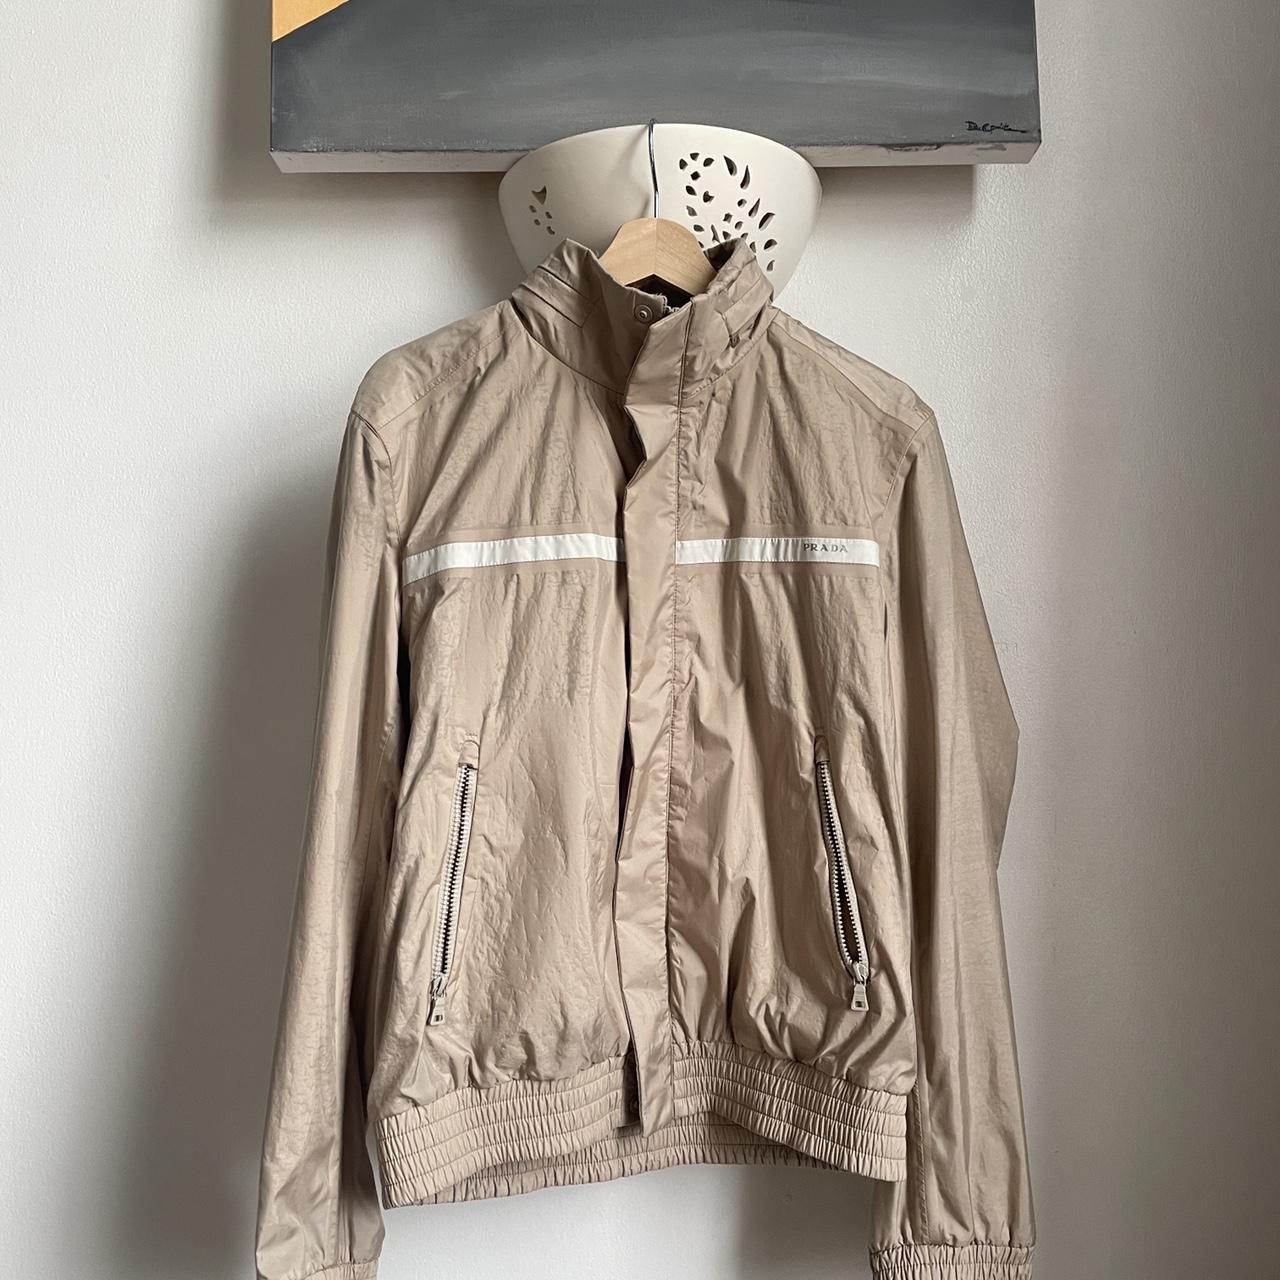 Vintage Prada light jacket in Cream. Authentic, and... - Depop